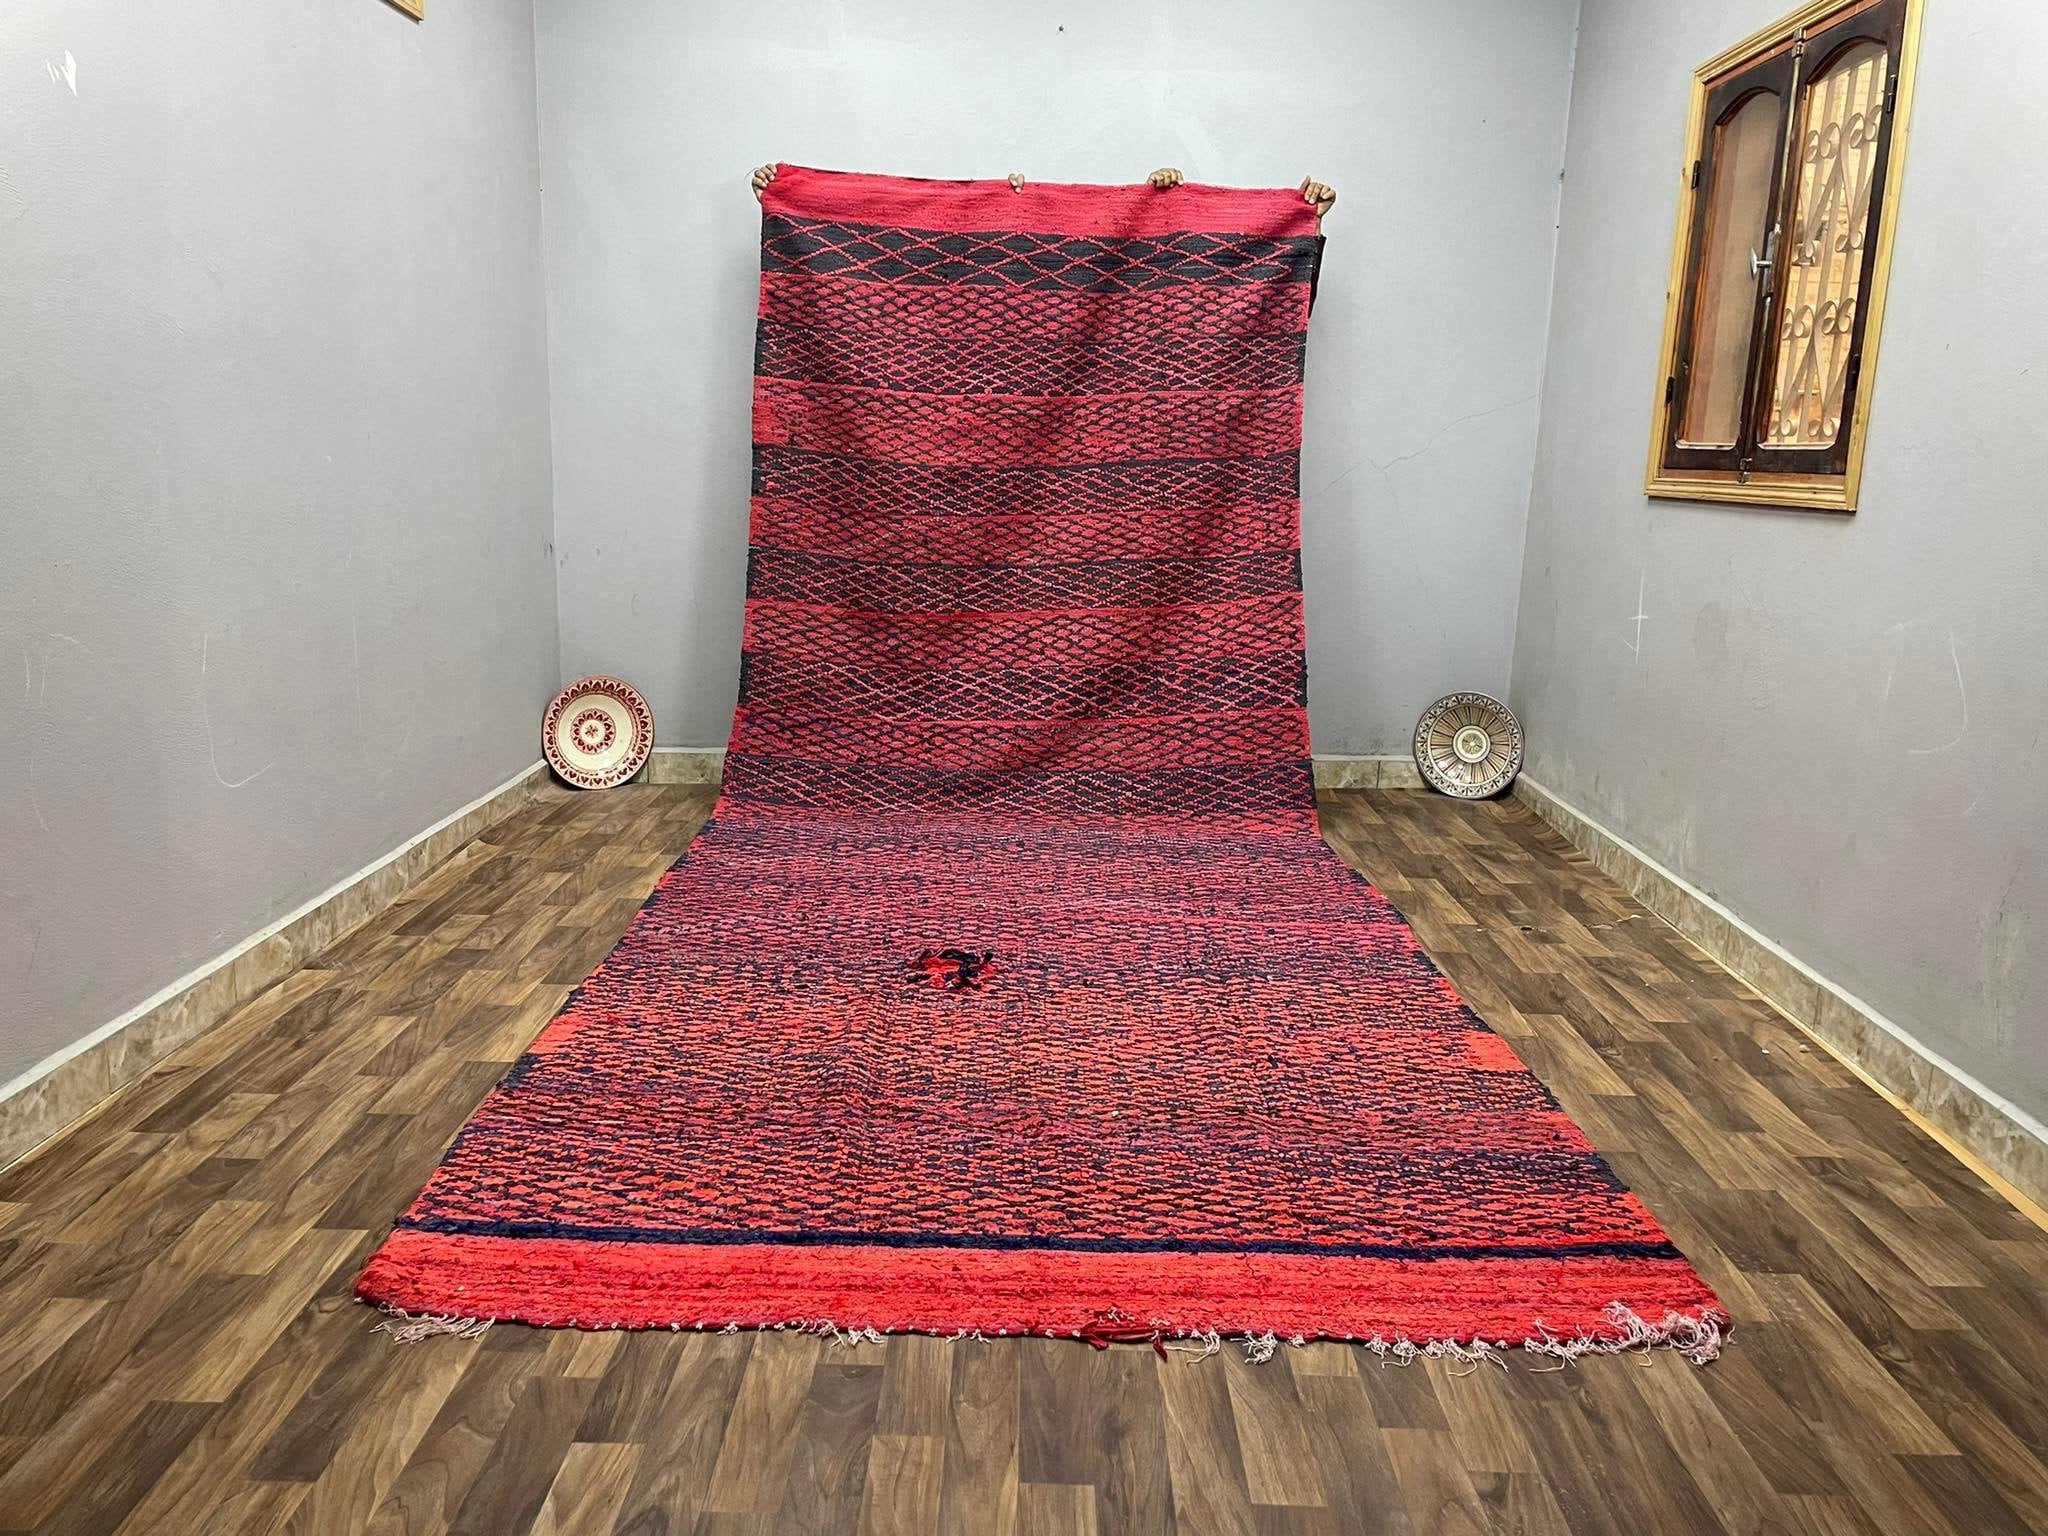 6x15 ft Handmade Kilim Red Area